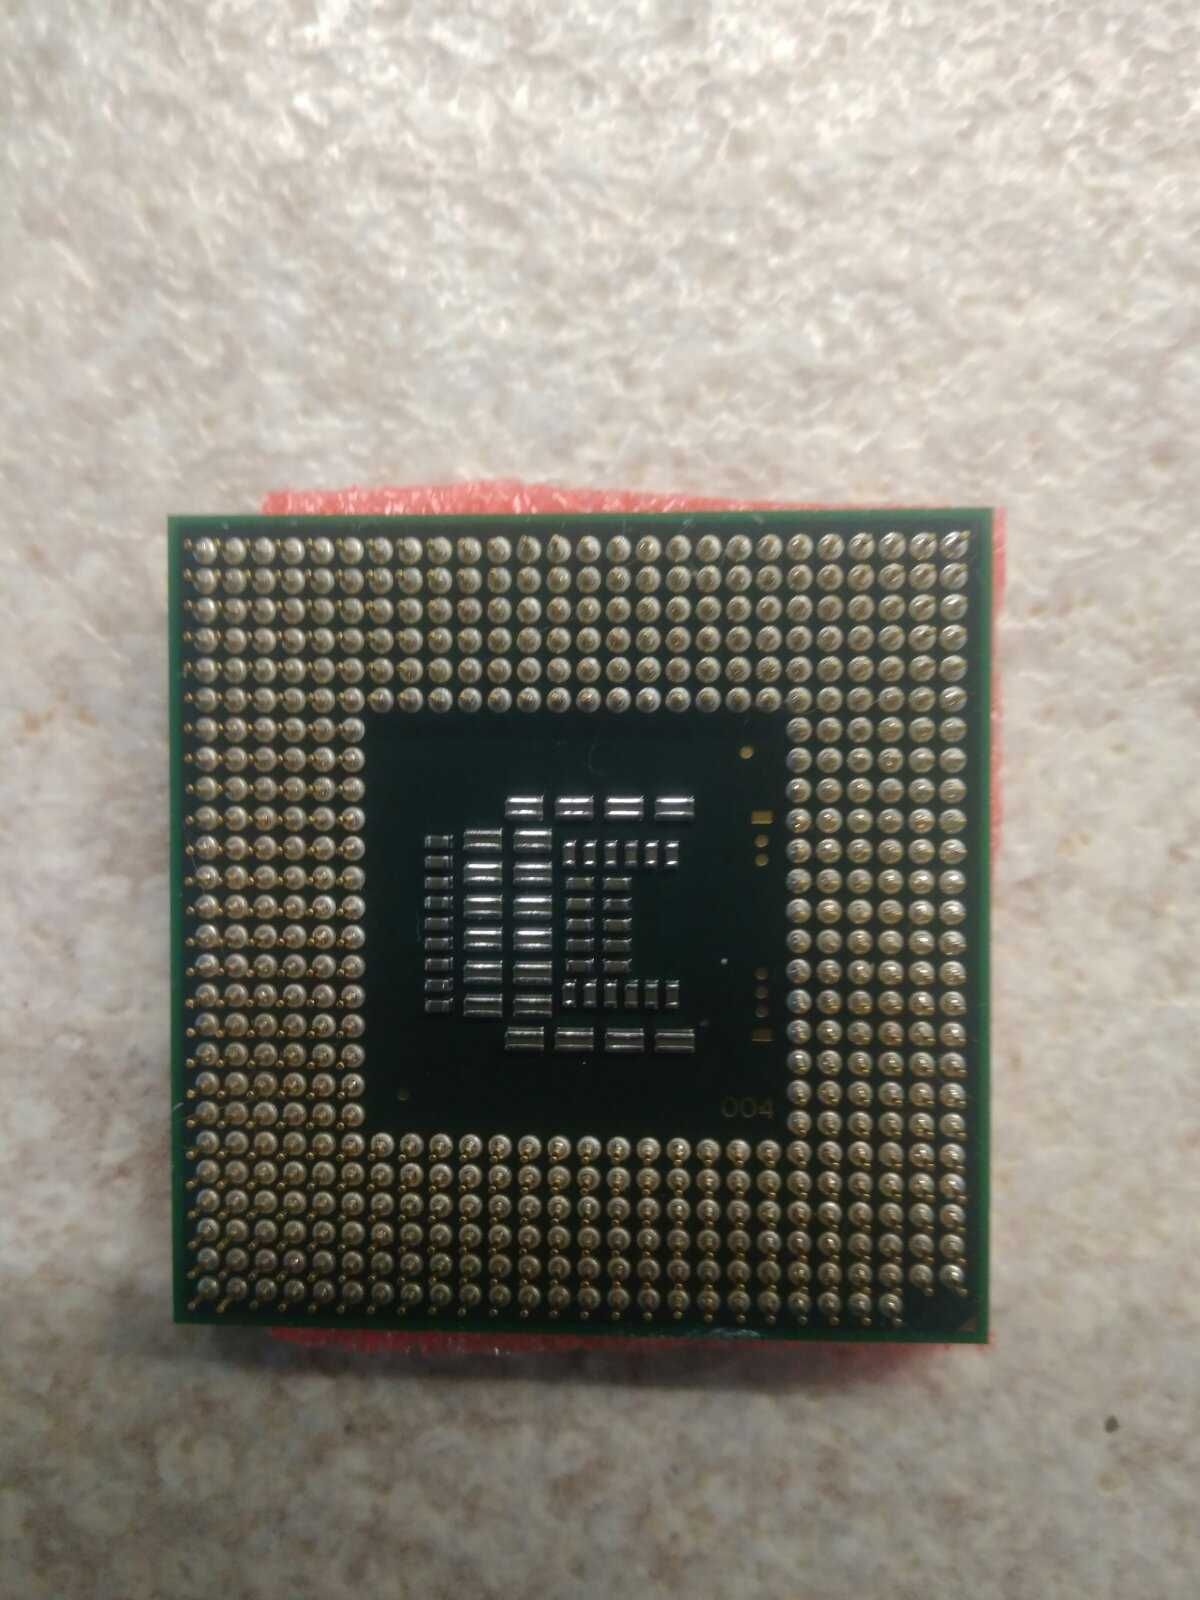 Intel Core 2 Duo T4200